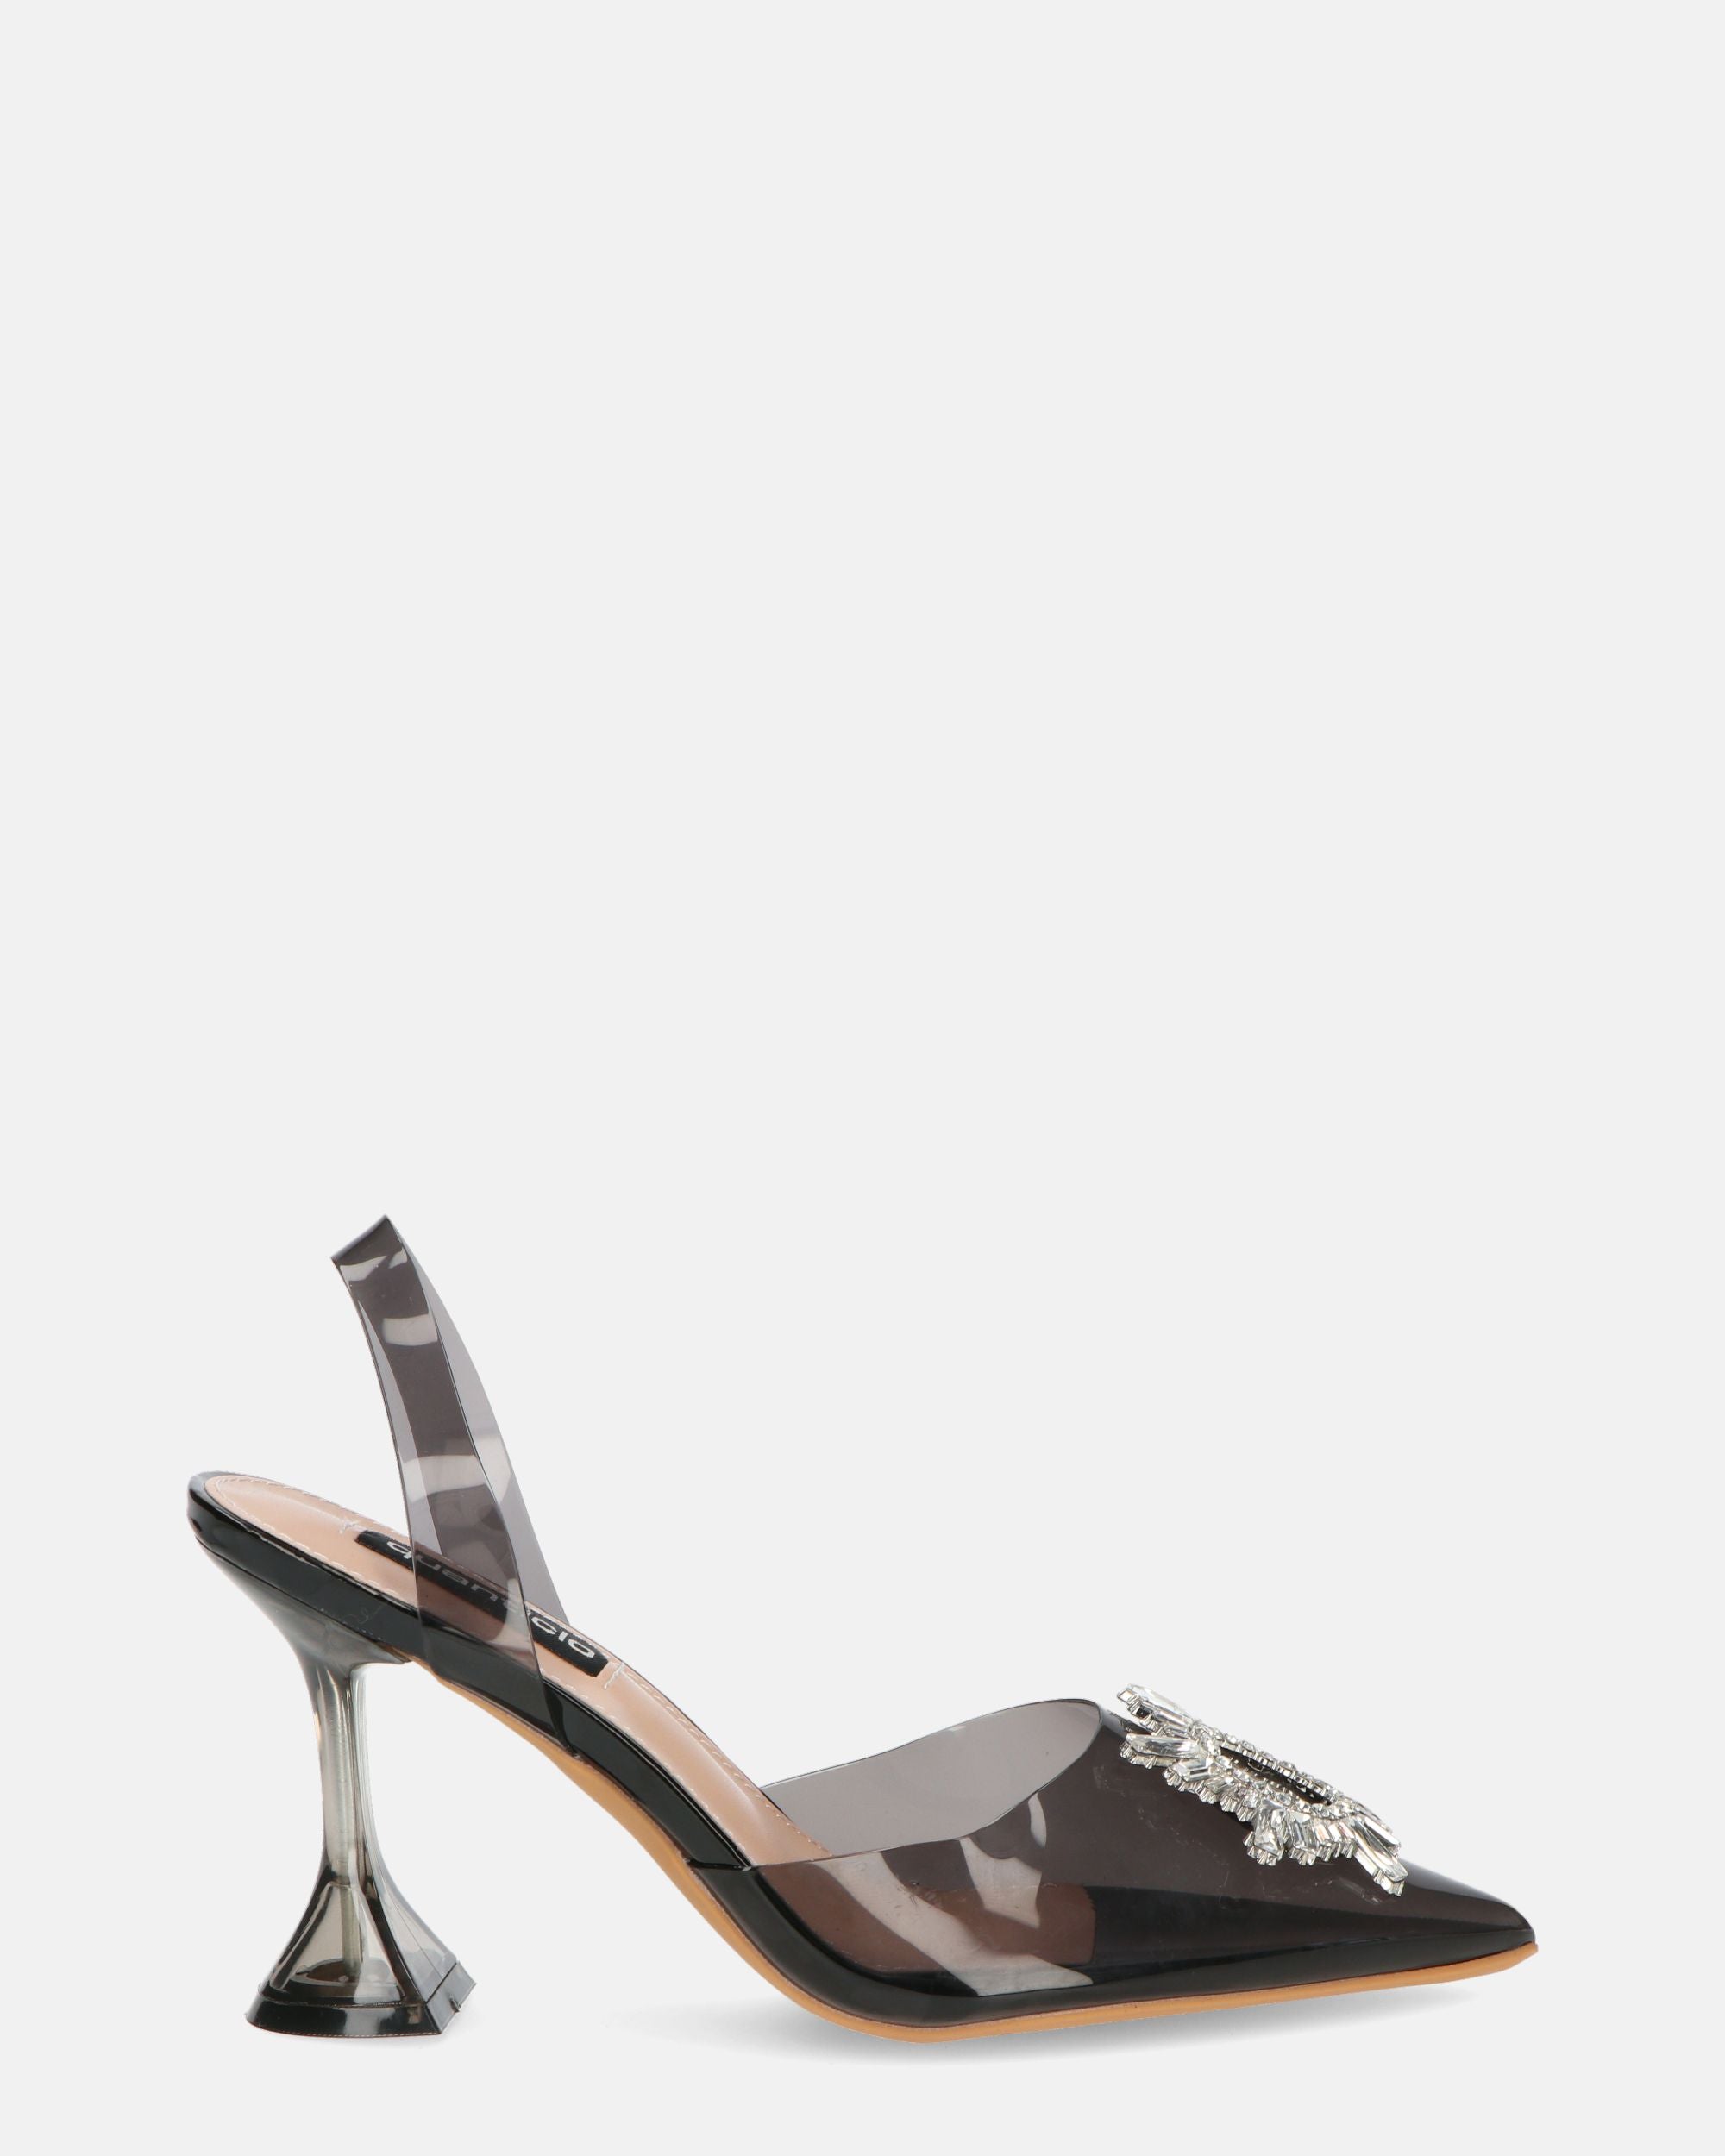 KENAN - scarpe in perspex nero con decorazione di gemme in punta